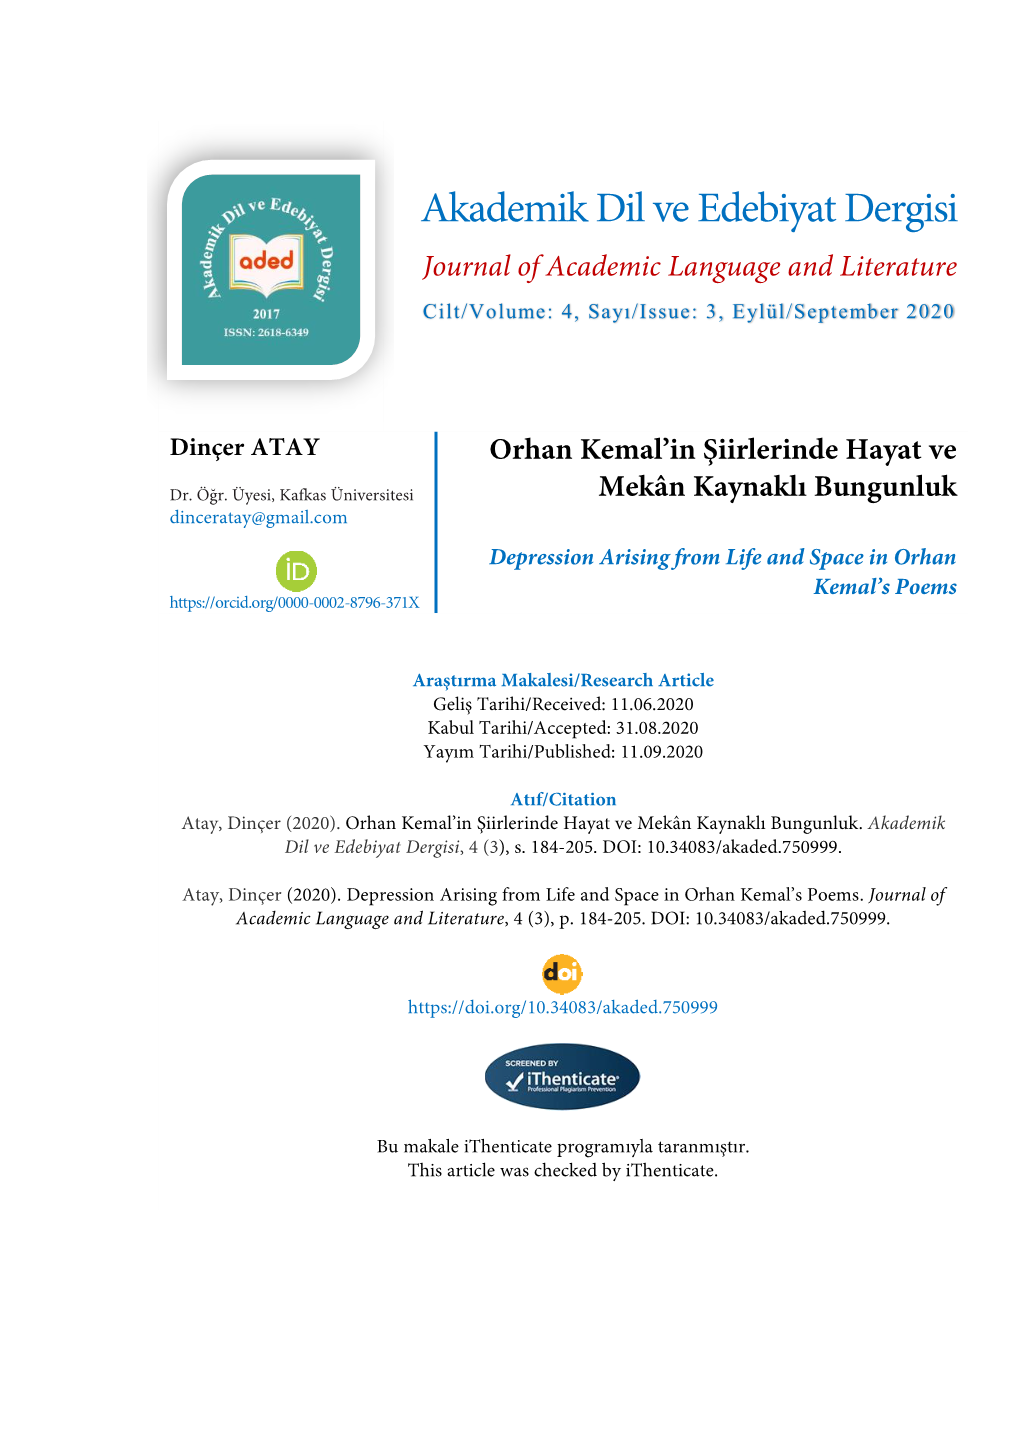 Akademik Dil Ve Edebiyat Dergisi Journal of Academic Language and Literature Cilt/Volume: 4, Sayı/Issue: 3, Eylül/September 2020